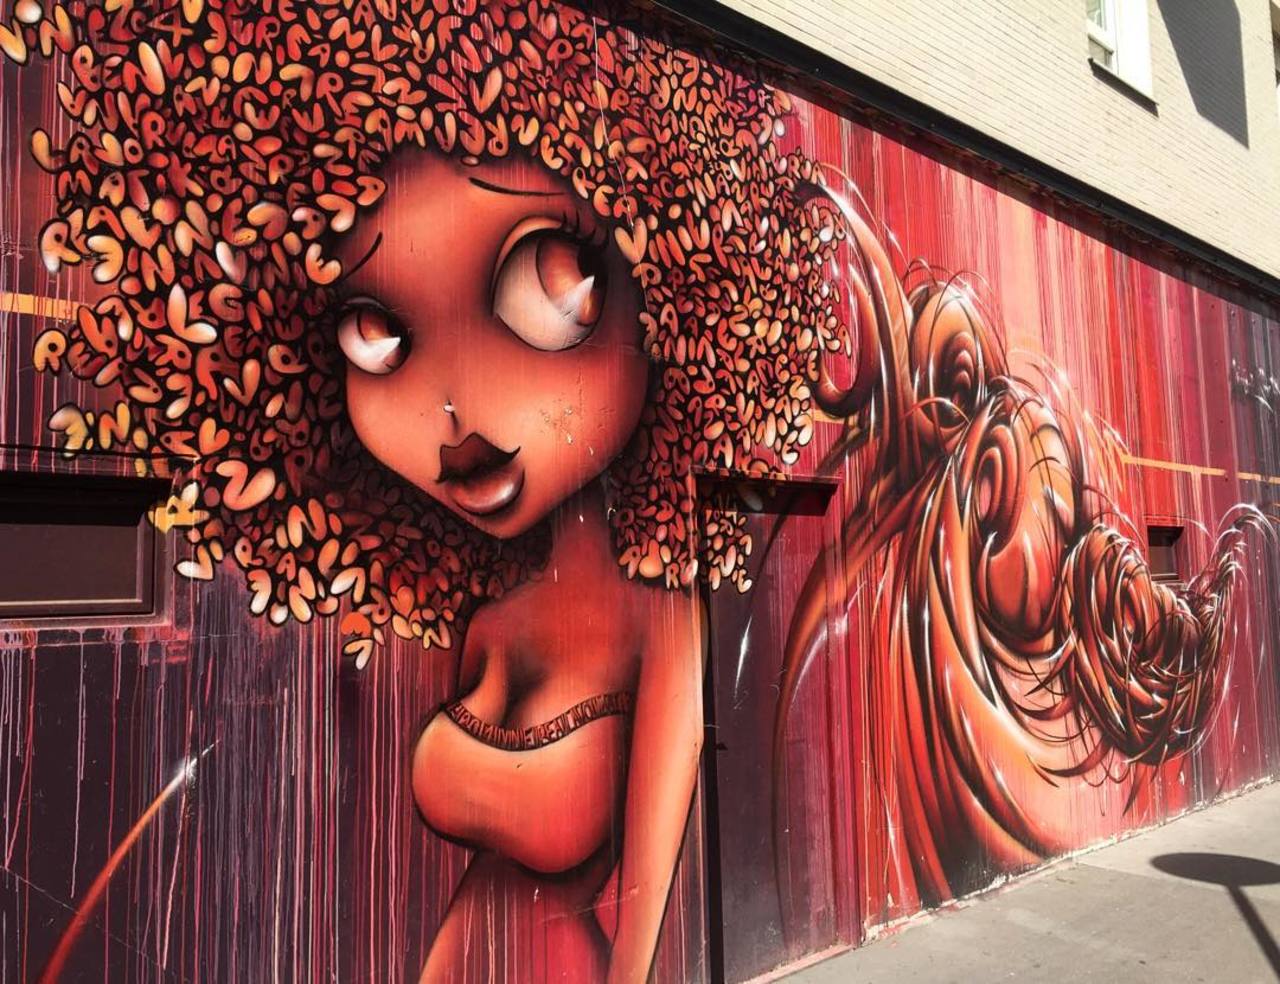 #Paris #graffiti photo by @catscoffeecreativity http://ift.tt/1VZqdhJ #StreetArt http://t.co/qXXpoM6aXJ